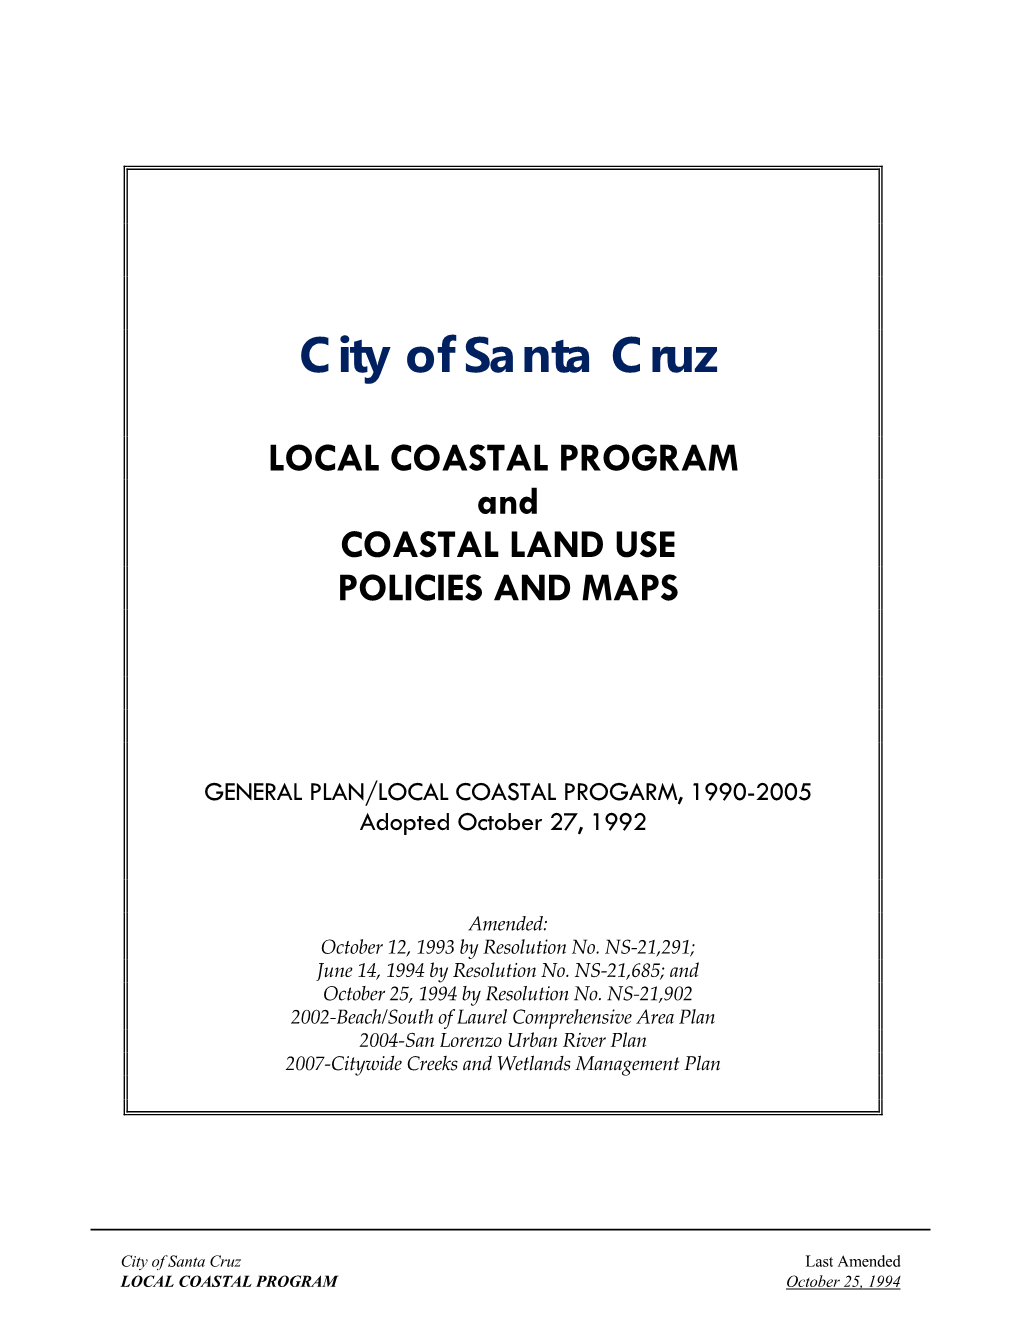 LOCAL COASTAL PROGRAM and COASTAL LAND USE POLICIES and MAPS